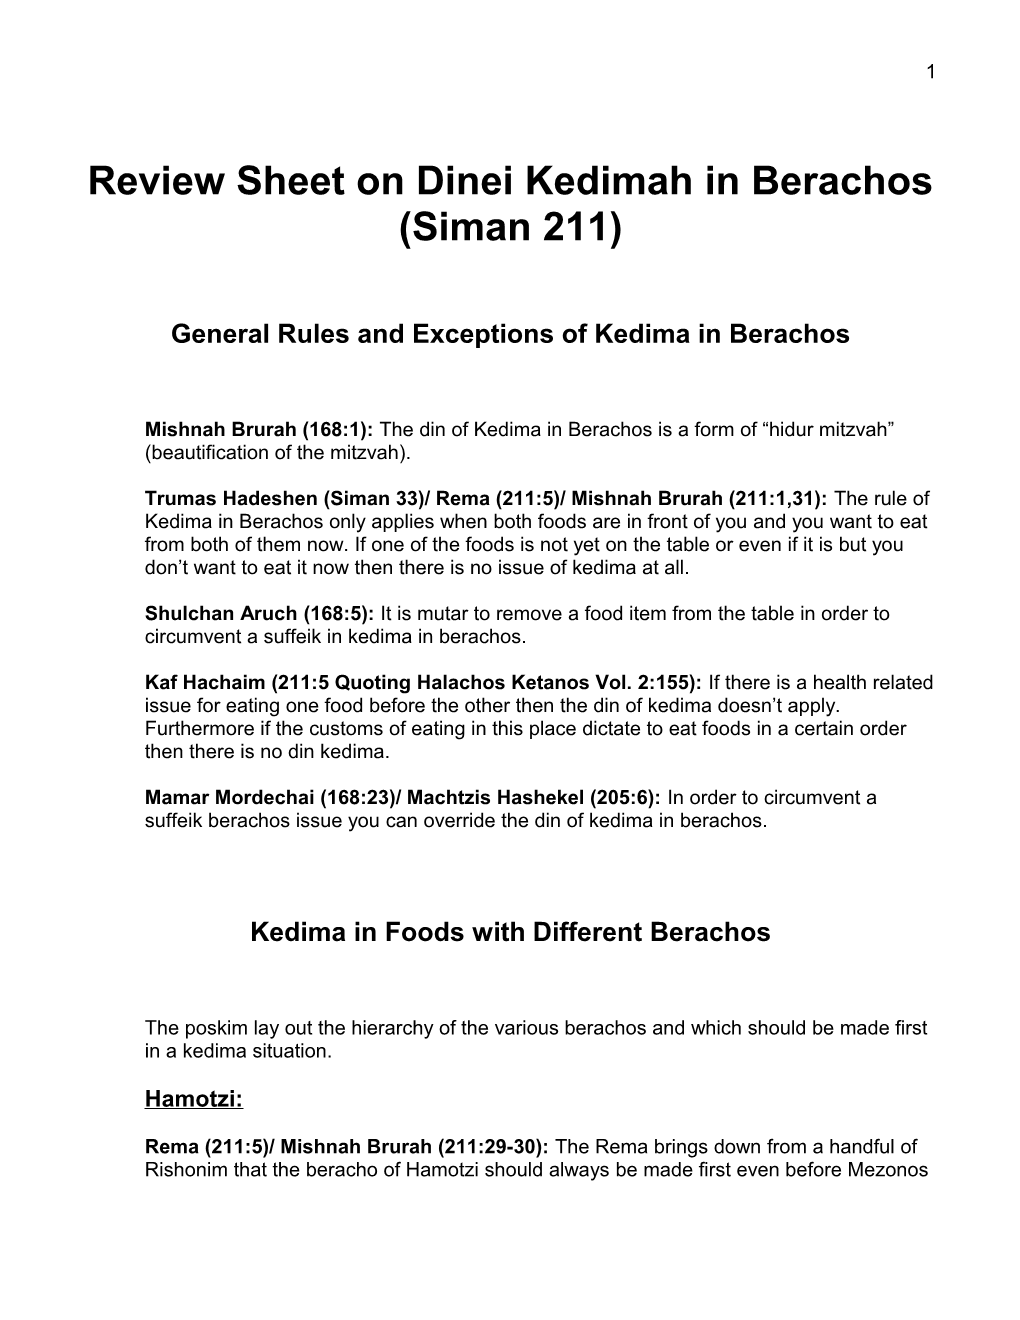 Review Sheet on Dinei Kedimah in Berachos (Siman 211)